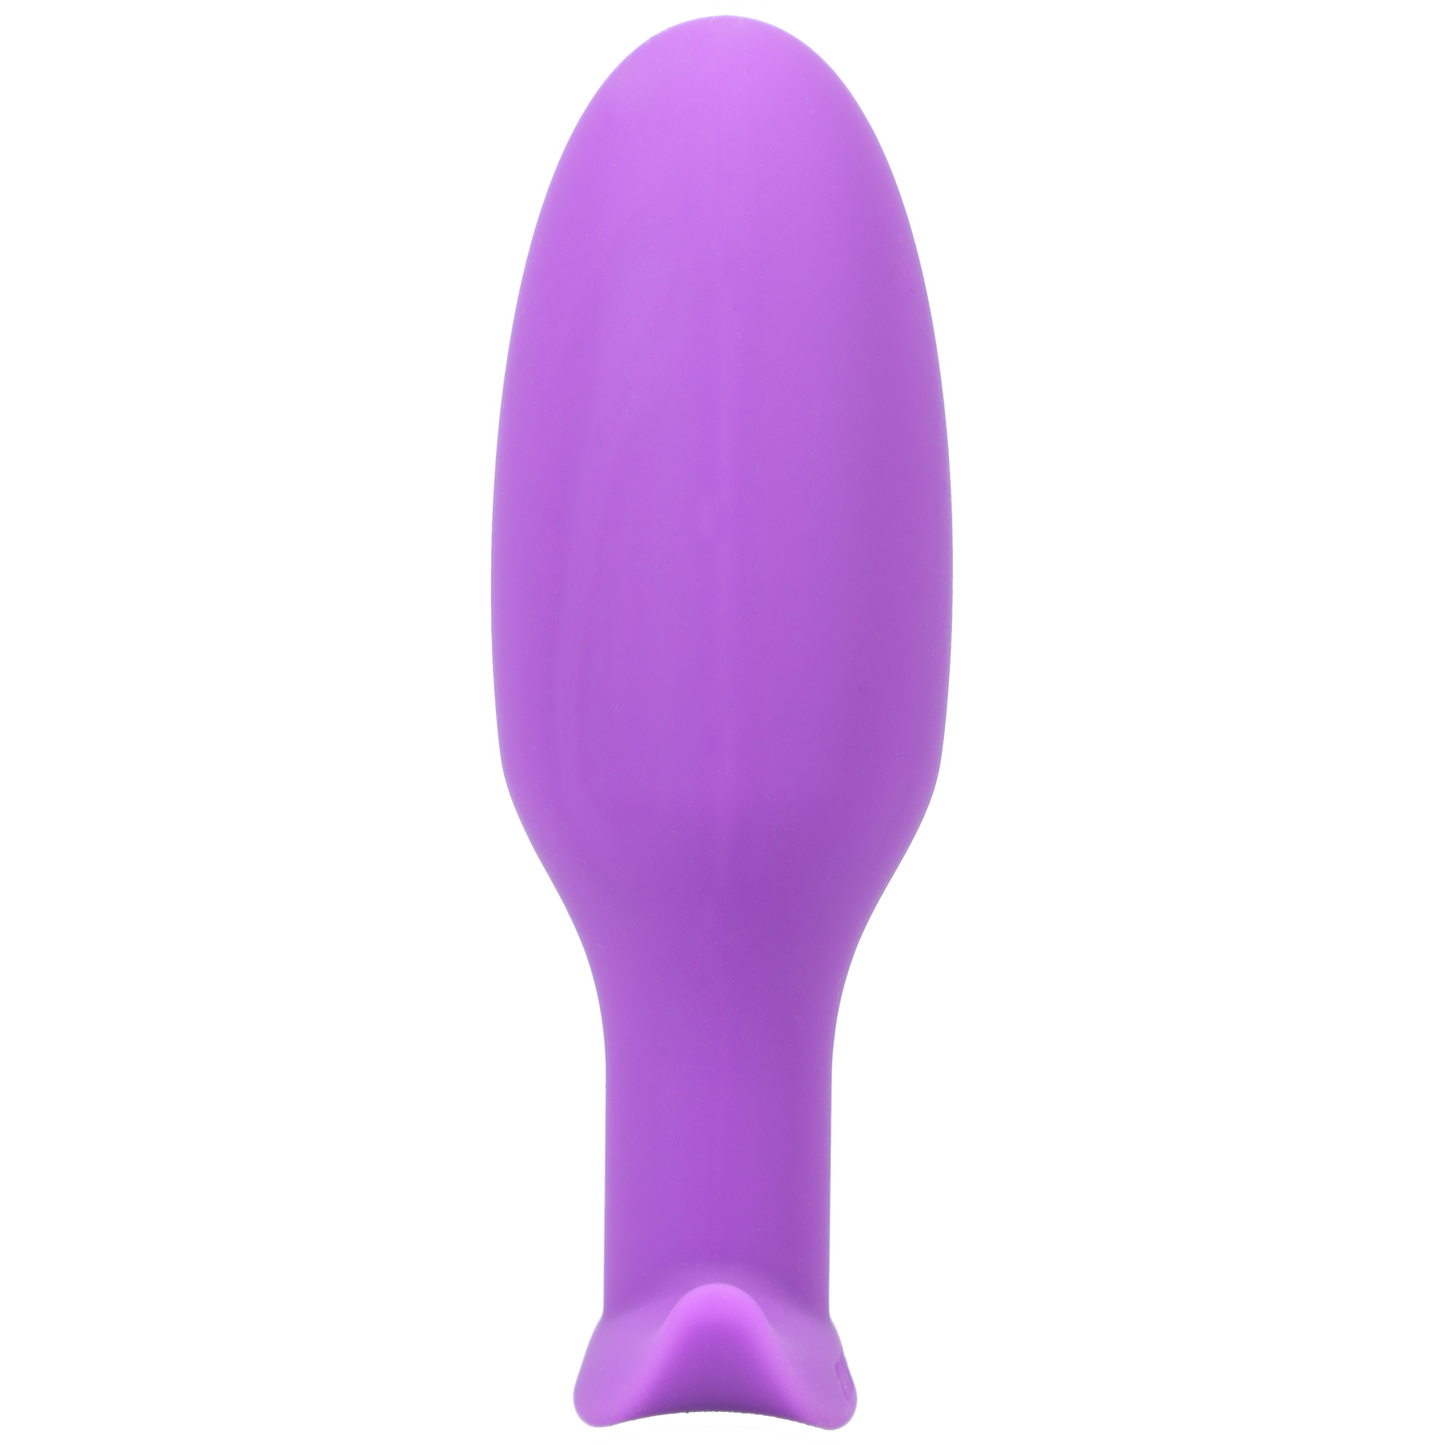 Silicone Ryder Butt Plug - Lilac